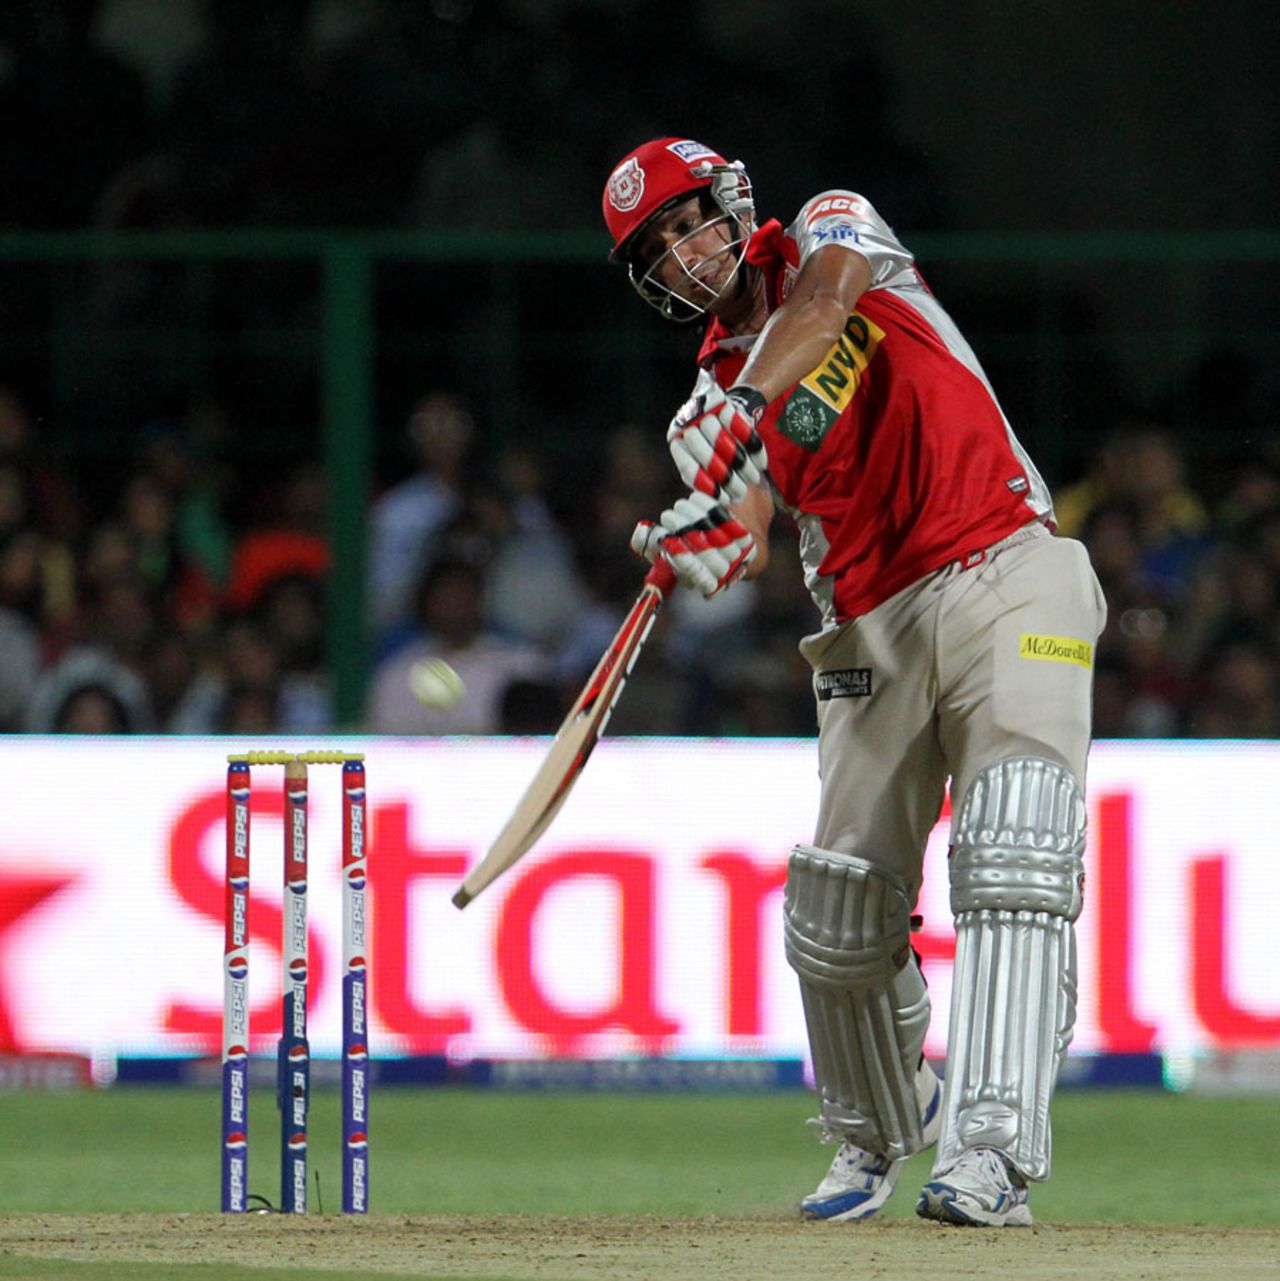 Azhar Mahmood strikes a powerful shot, Royal Challengers Bangalore v Kings XI Punjab, IPL 2013, Bangalore, May 14, 2013